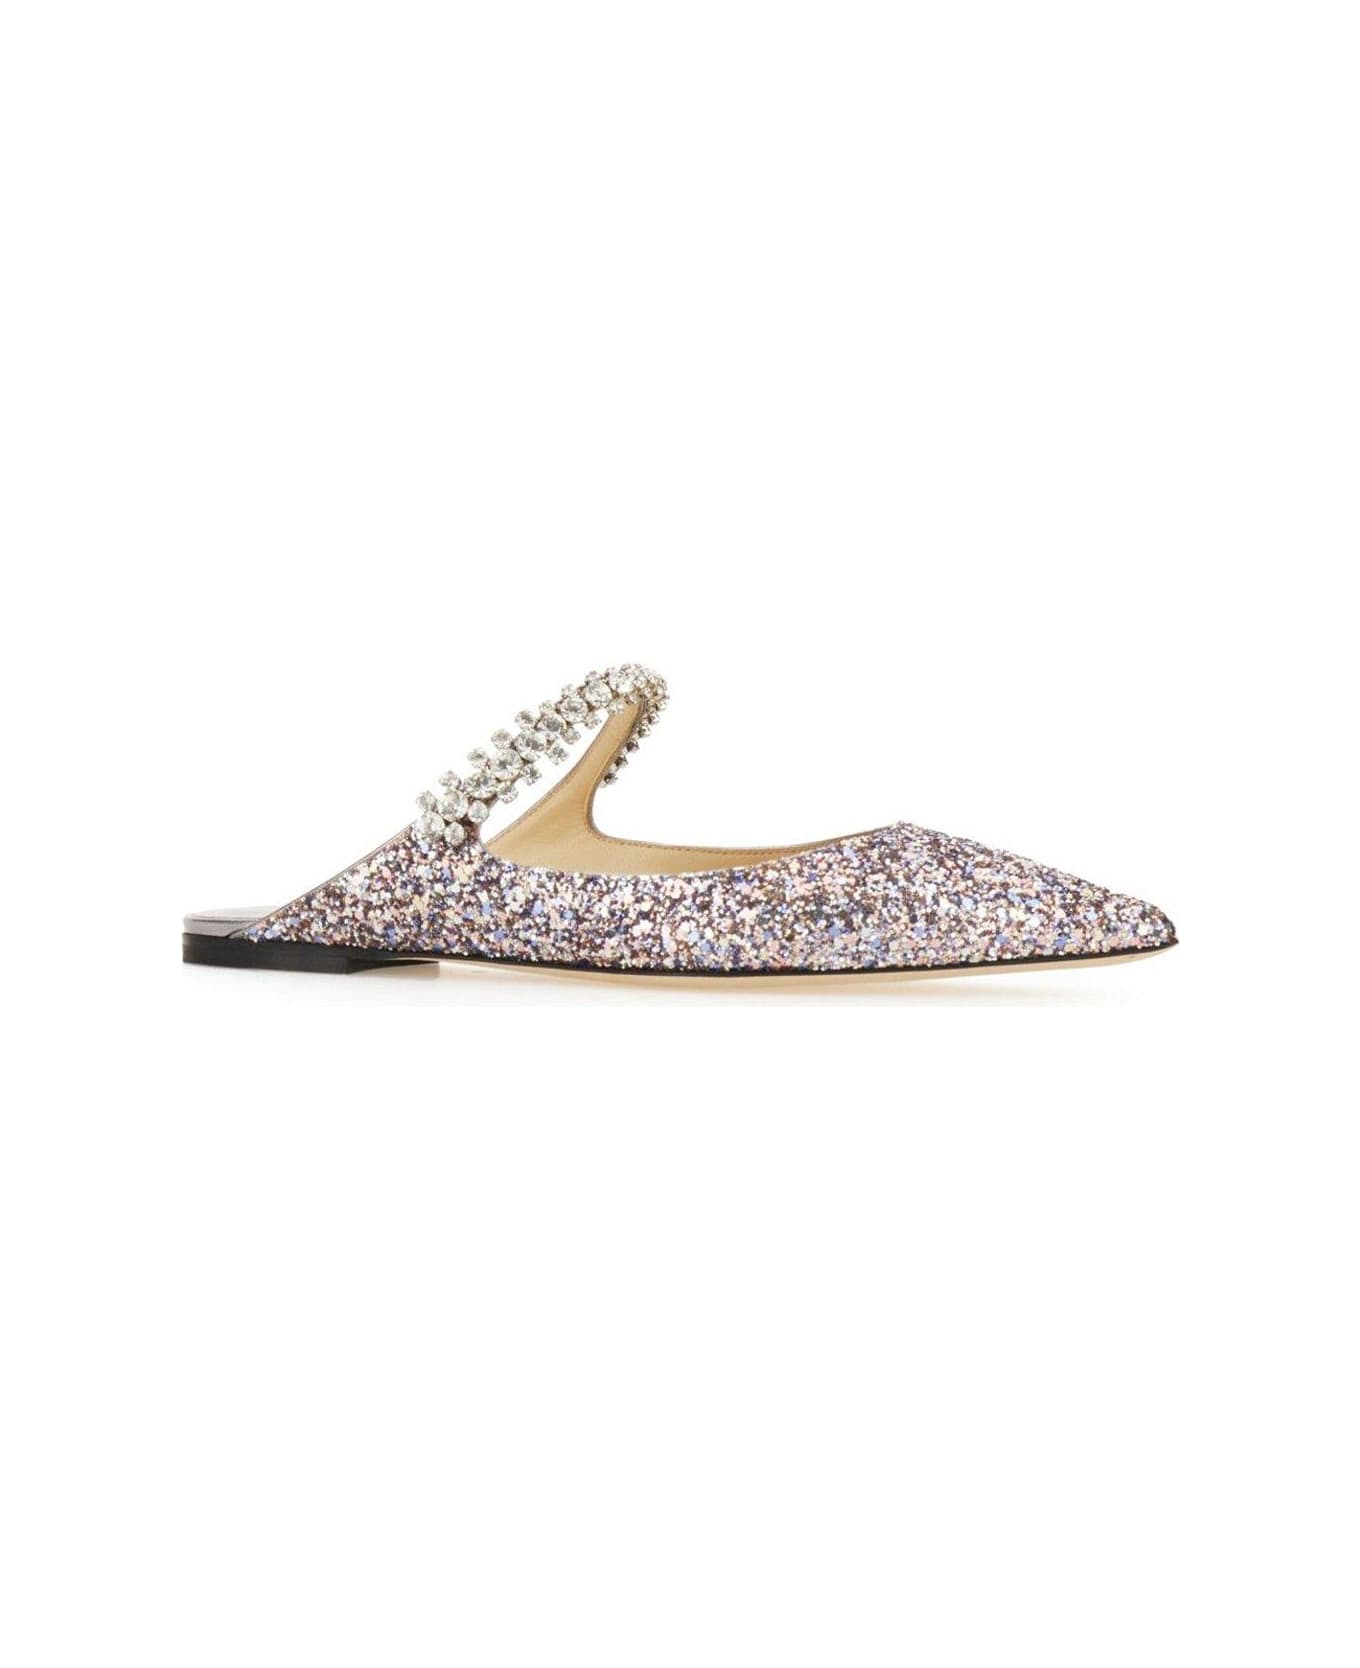 Jimmy Choo Bing Embellished Pointed Toe Ballerina Shoes - Silver フラットシューズ